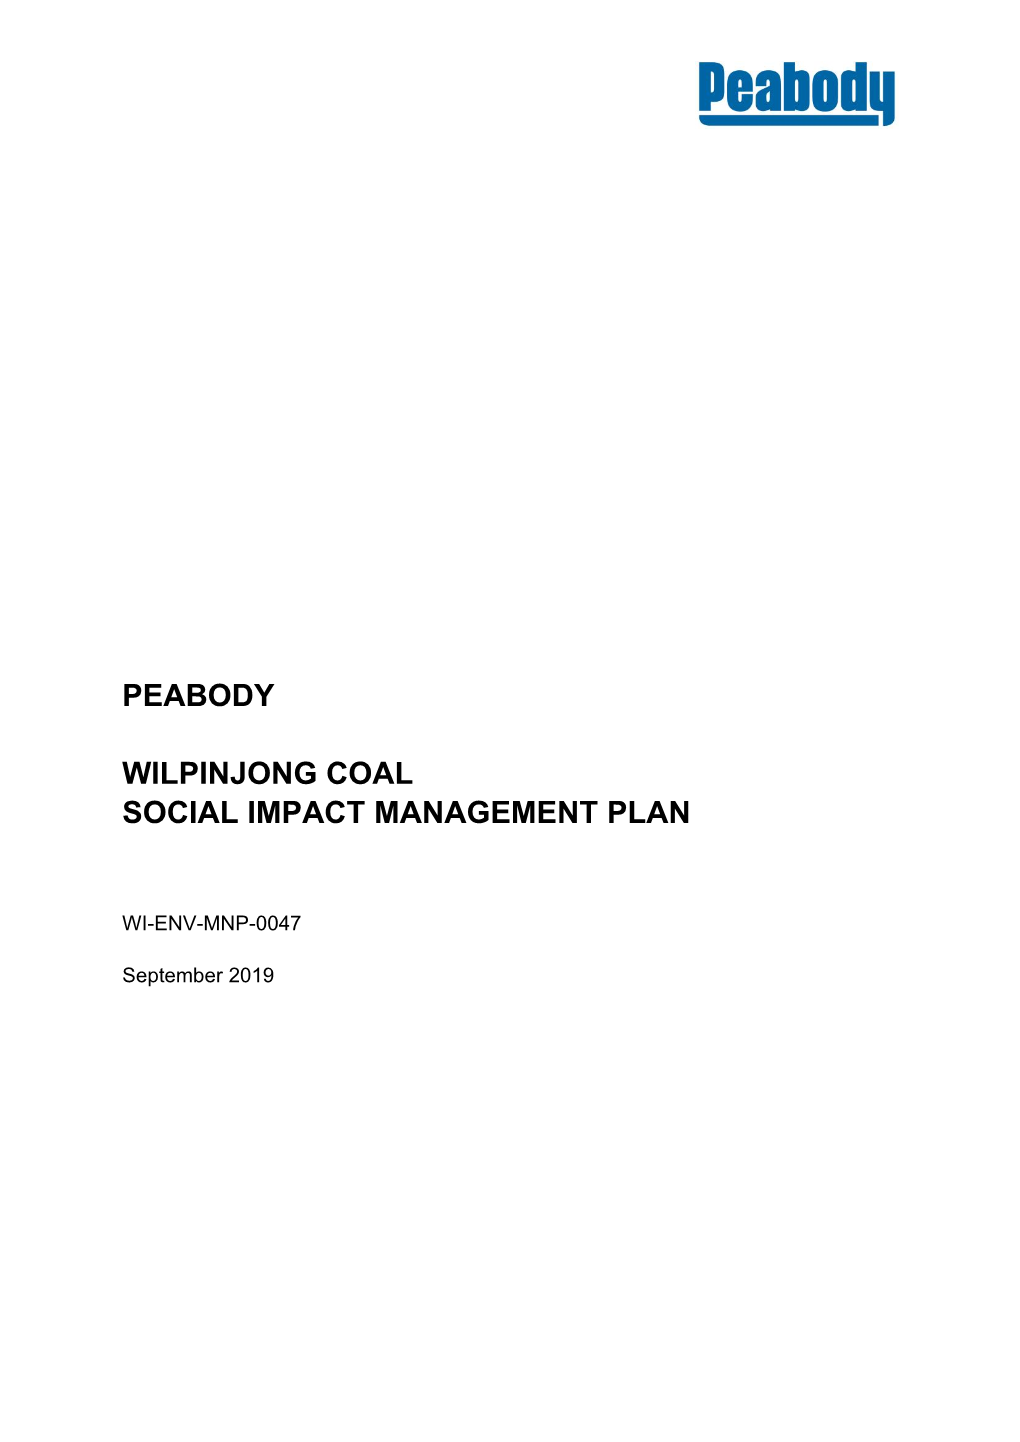 Peabody Wilpinjong Coal Social Impact Management Plan